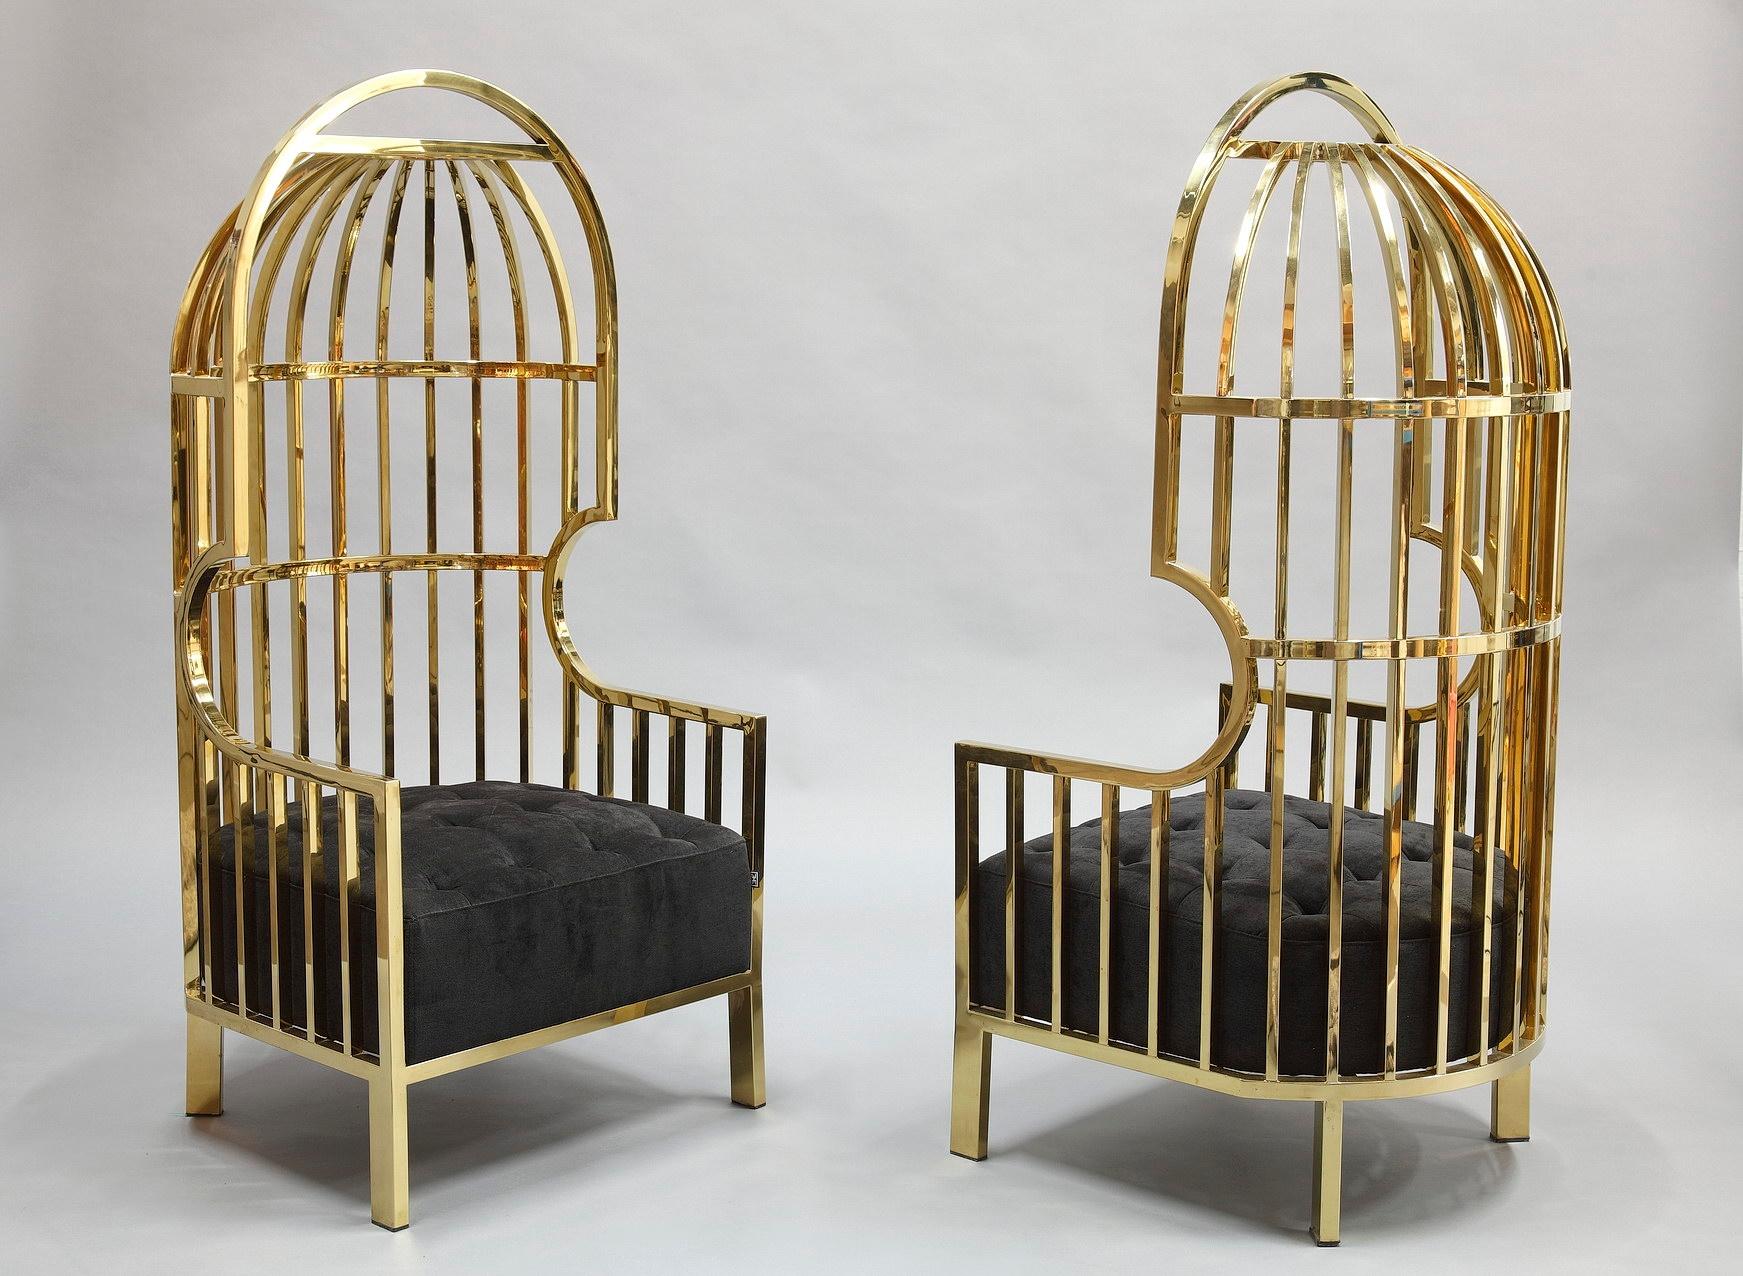 gold birdcage chair